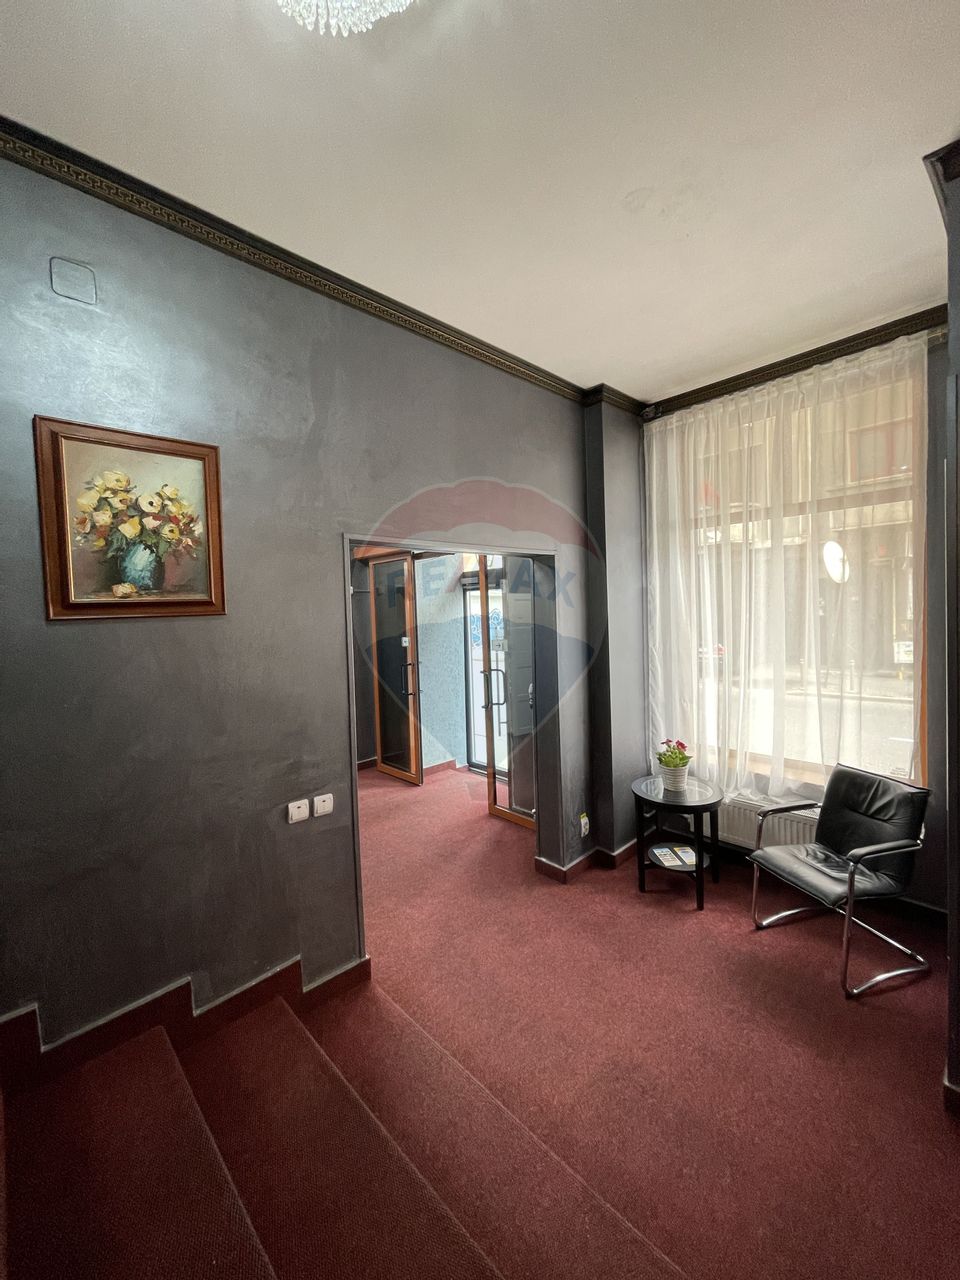 De inchiriat Hotel 50 camere central | Bucuresti |